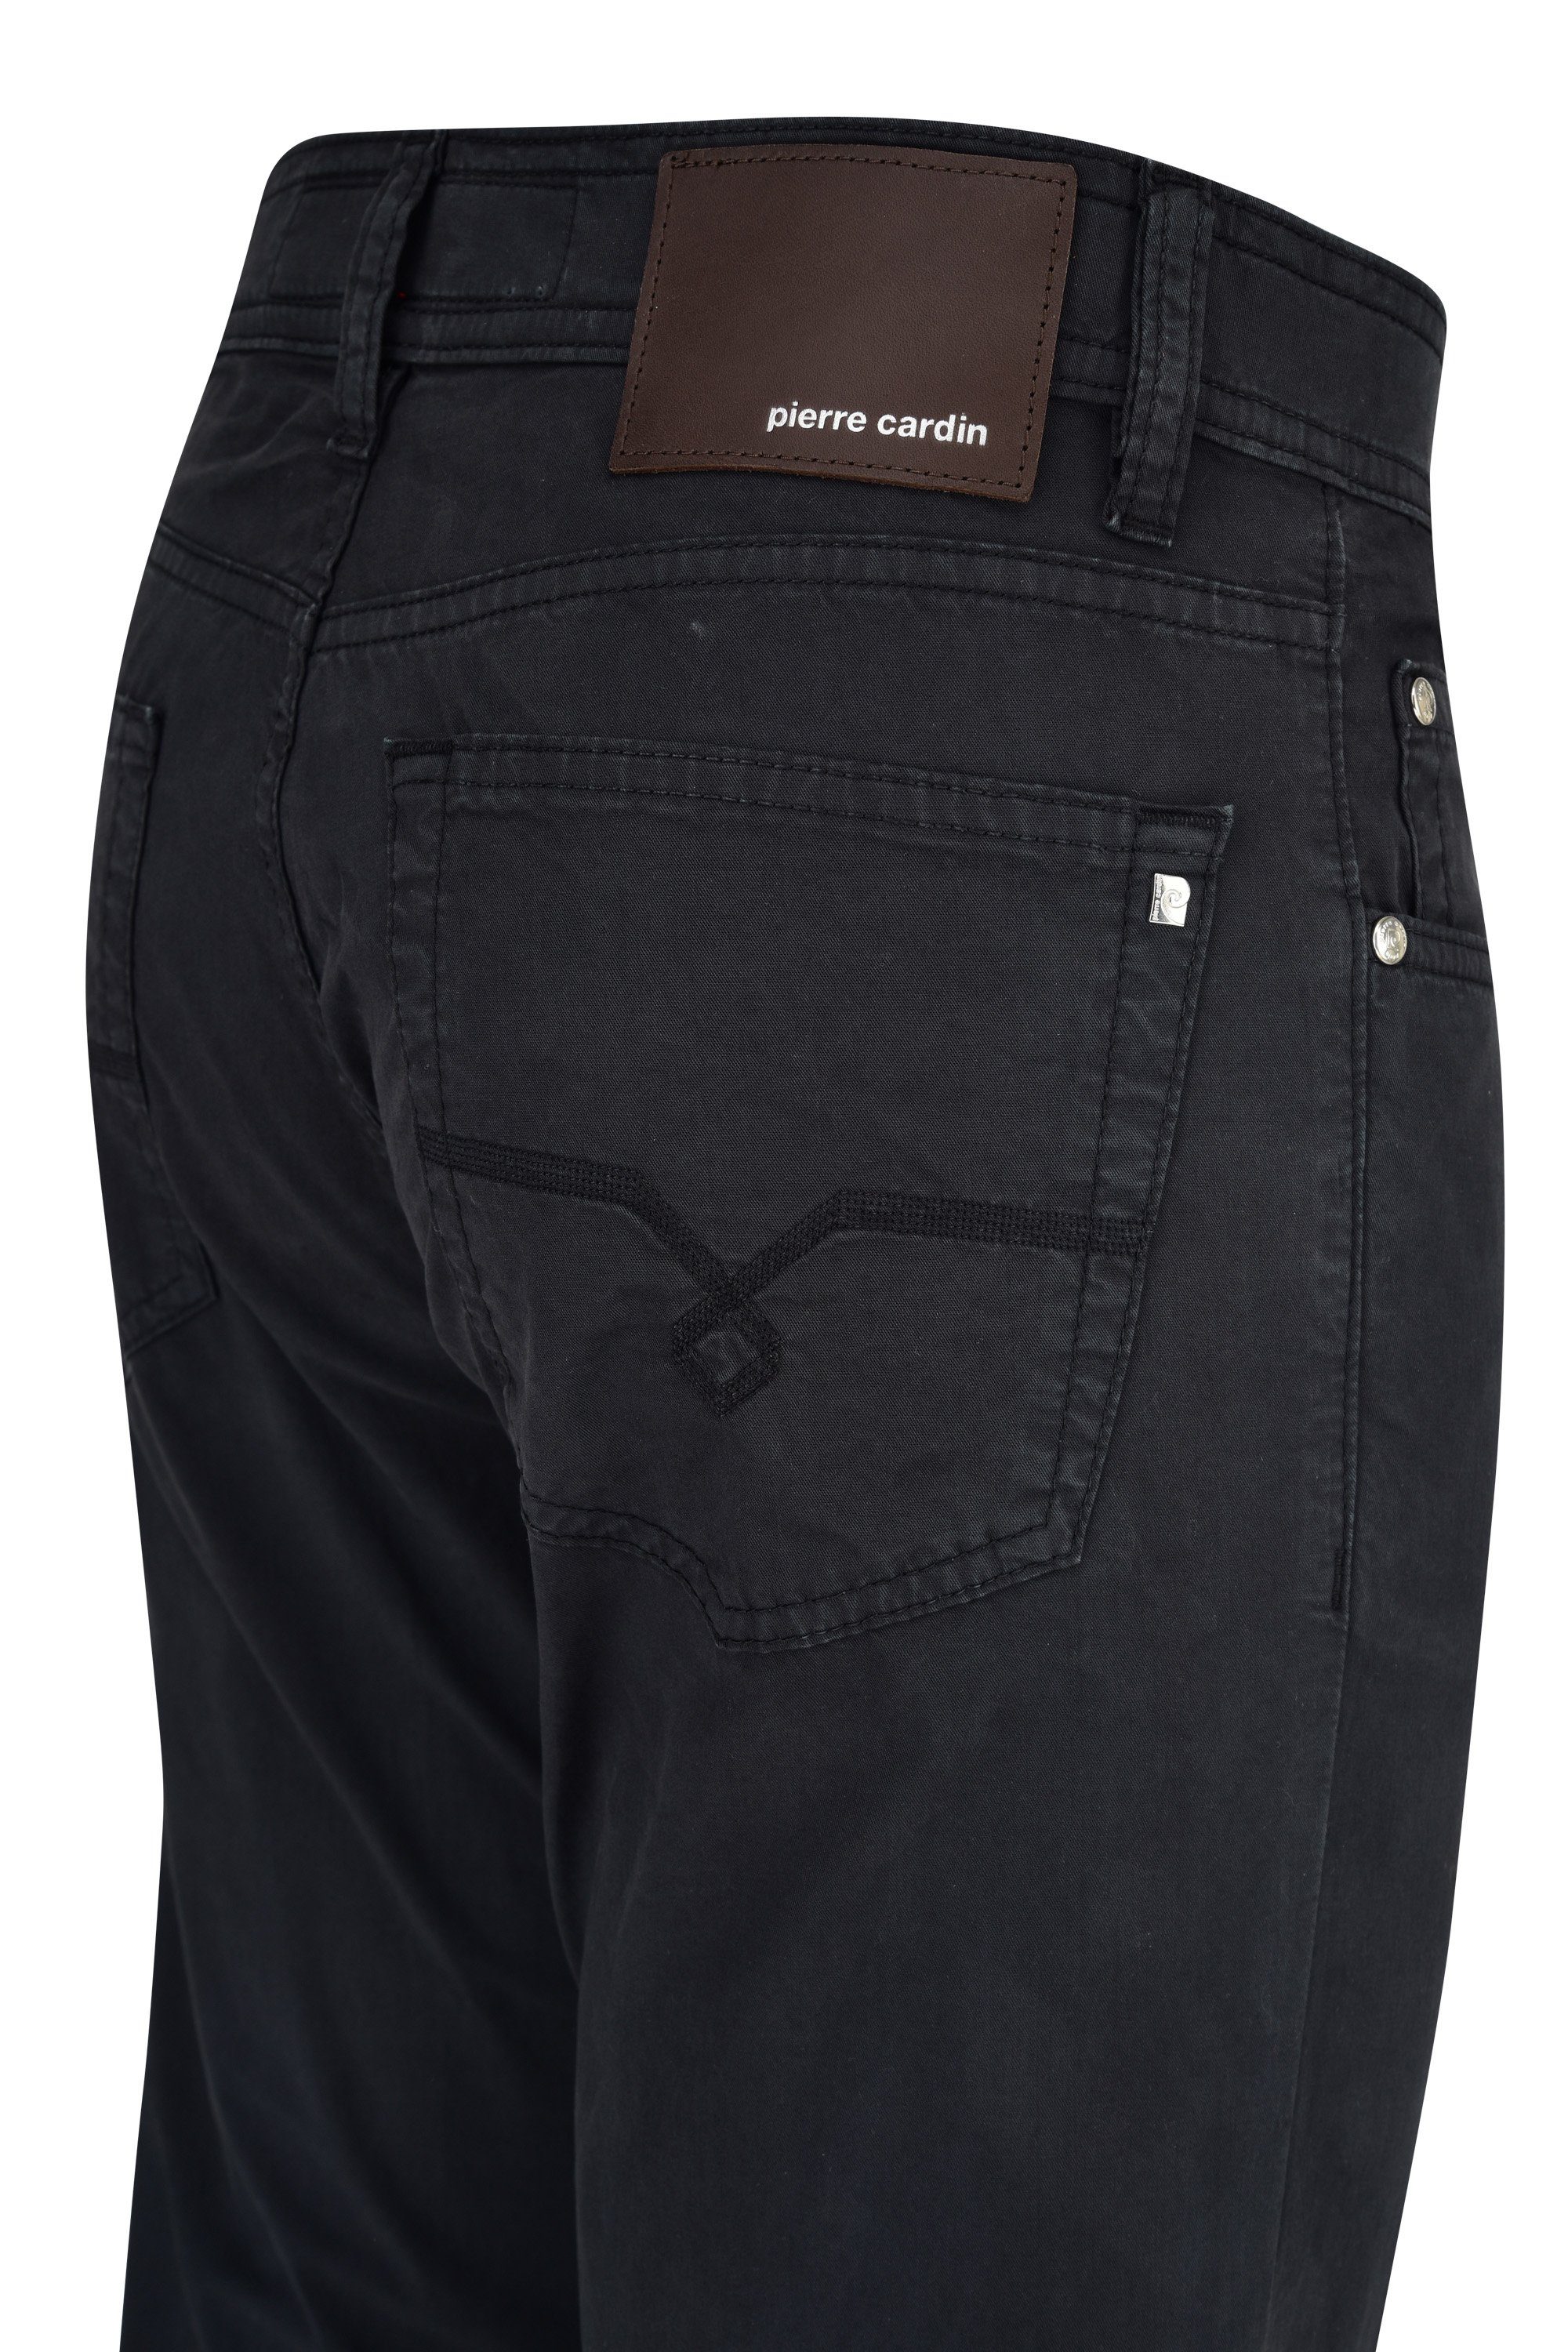 Pierre Cardin 5-Pocket-Jeans »PIERRE CARDIN DEAUVILLE summer air touch dark«